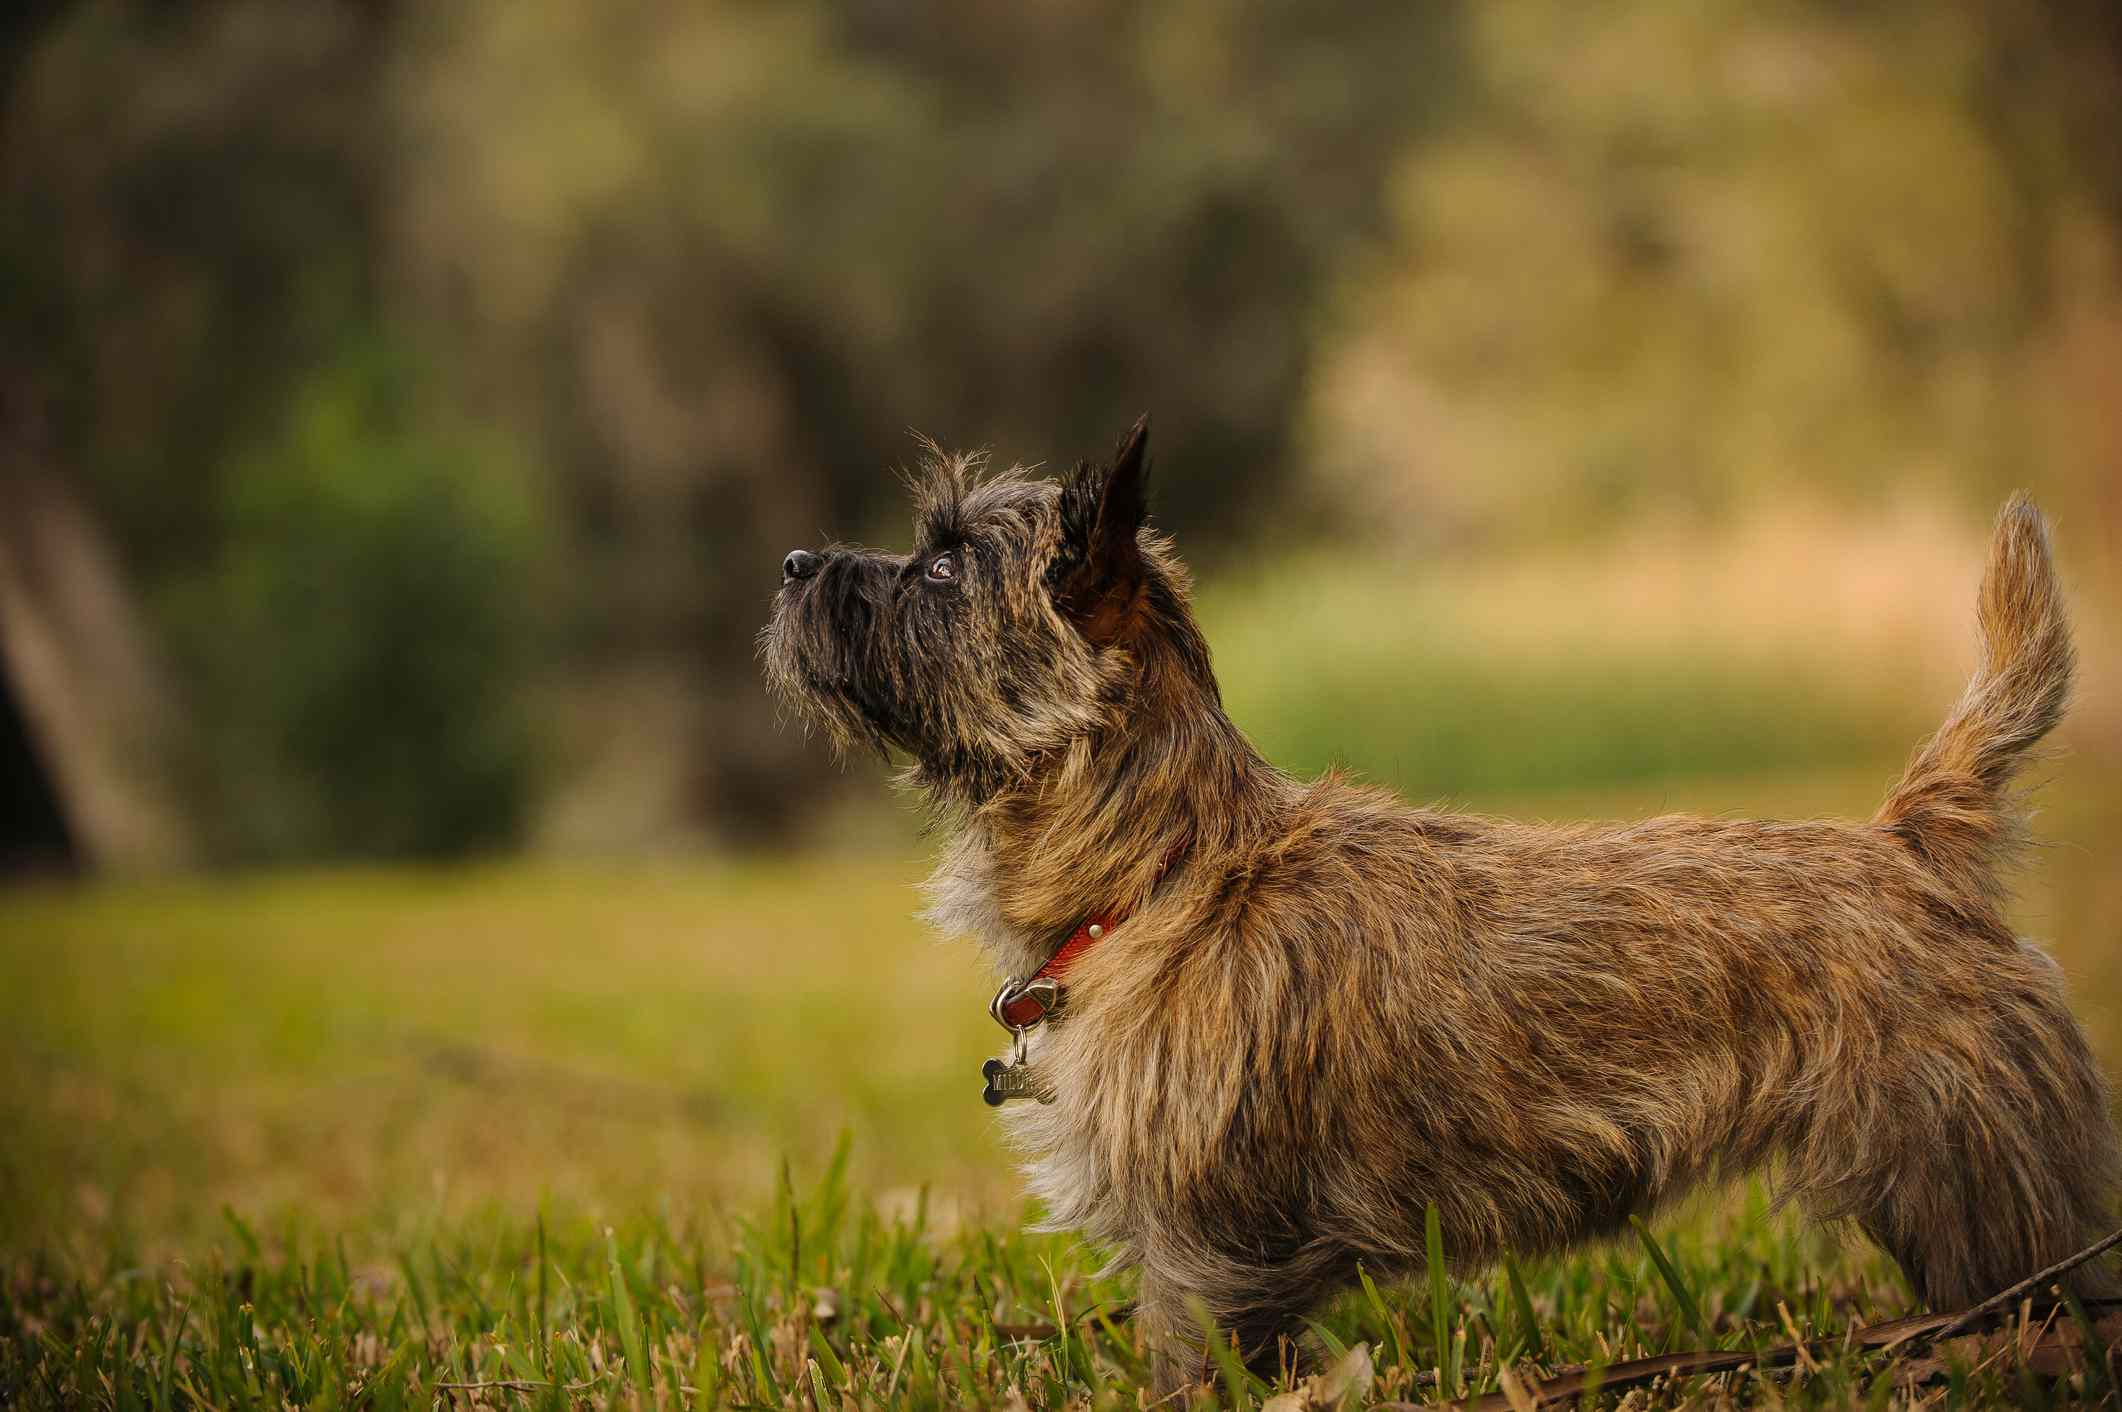 Side profile of Cairn Terrier in grassy field.